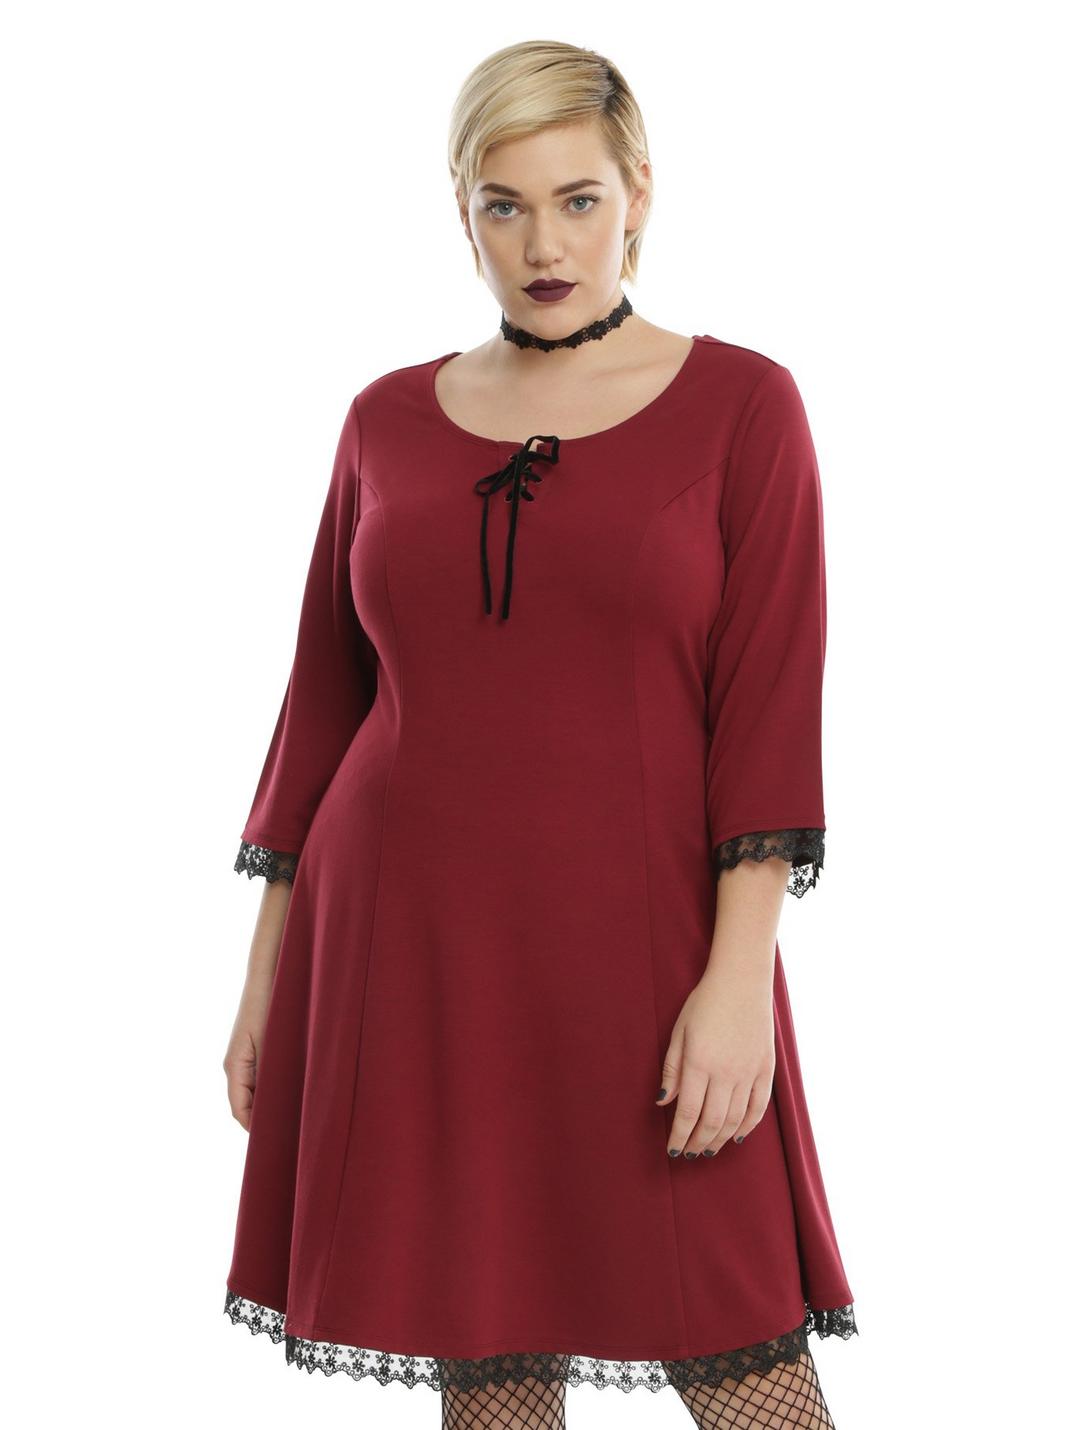 Burgundy Lace-Up Trim Dress Plus Size, RED, hi-res